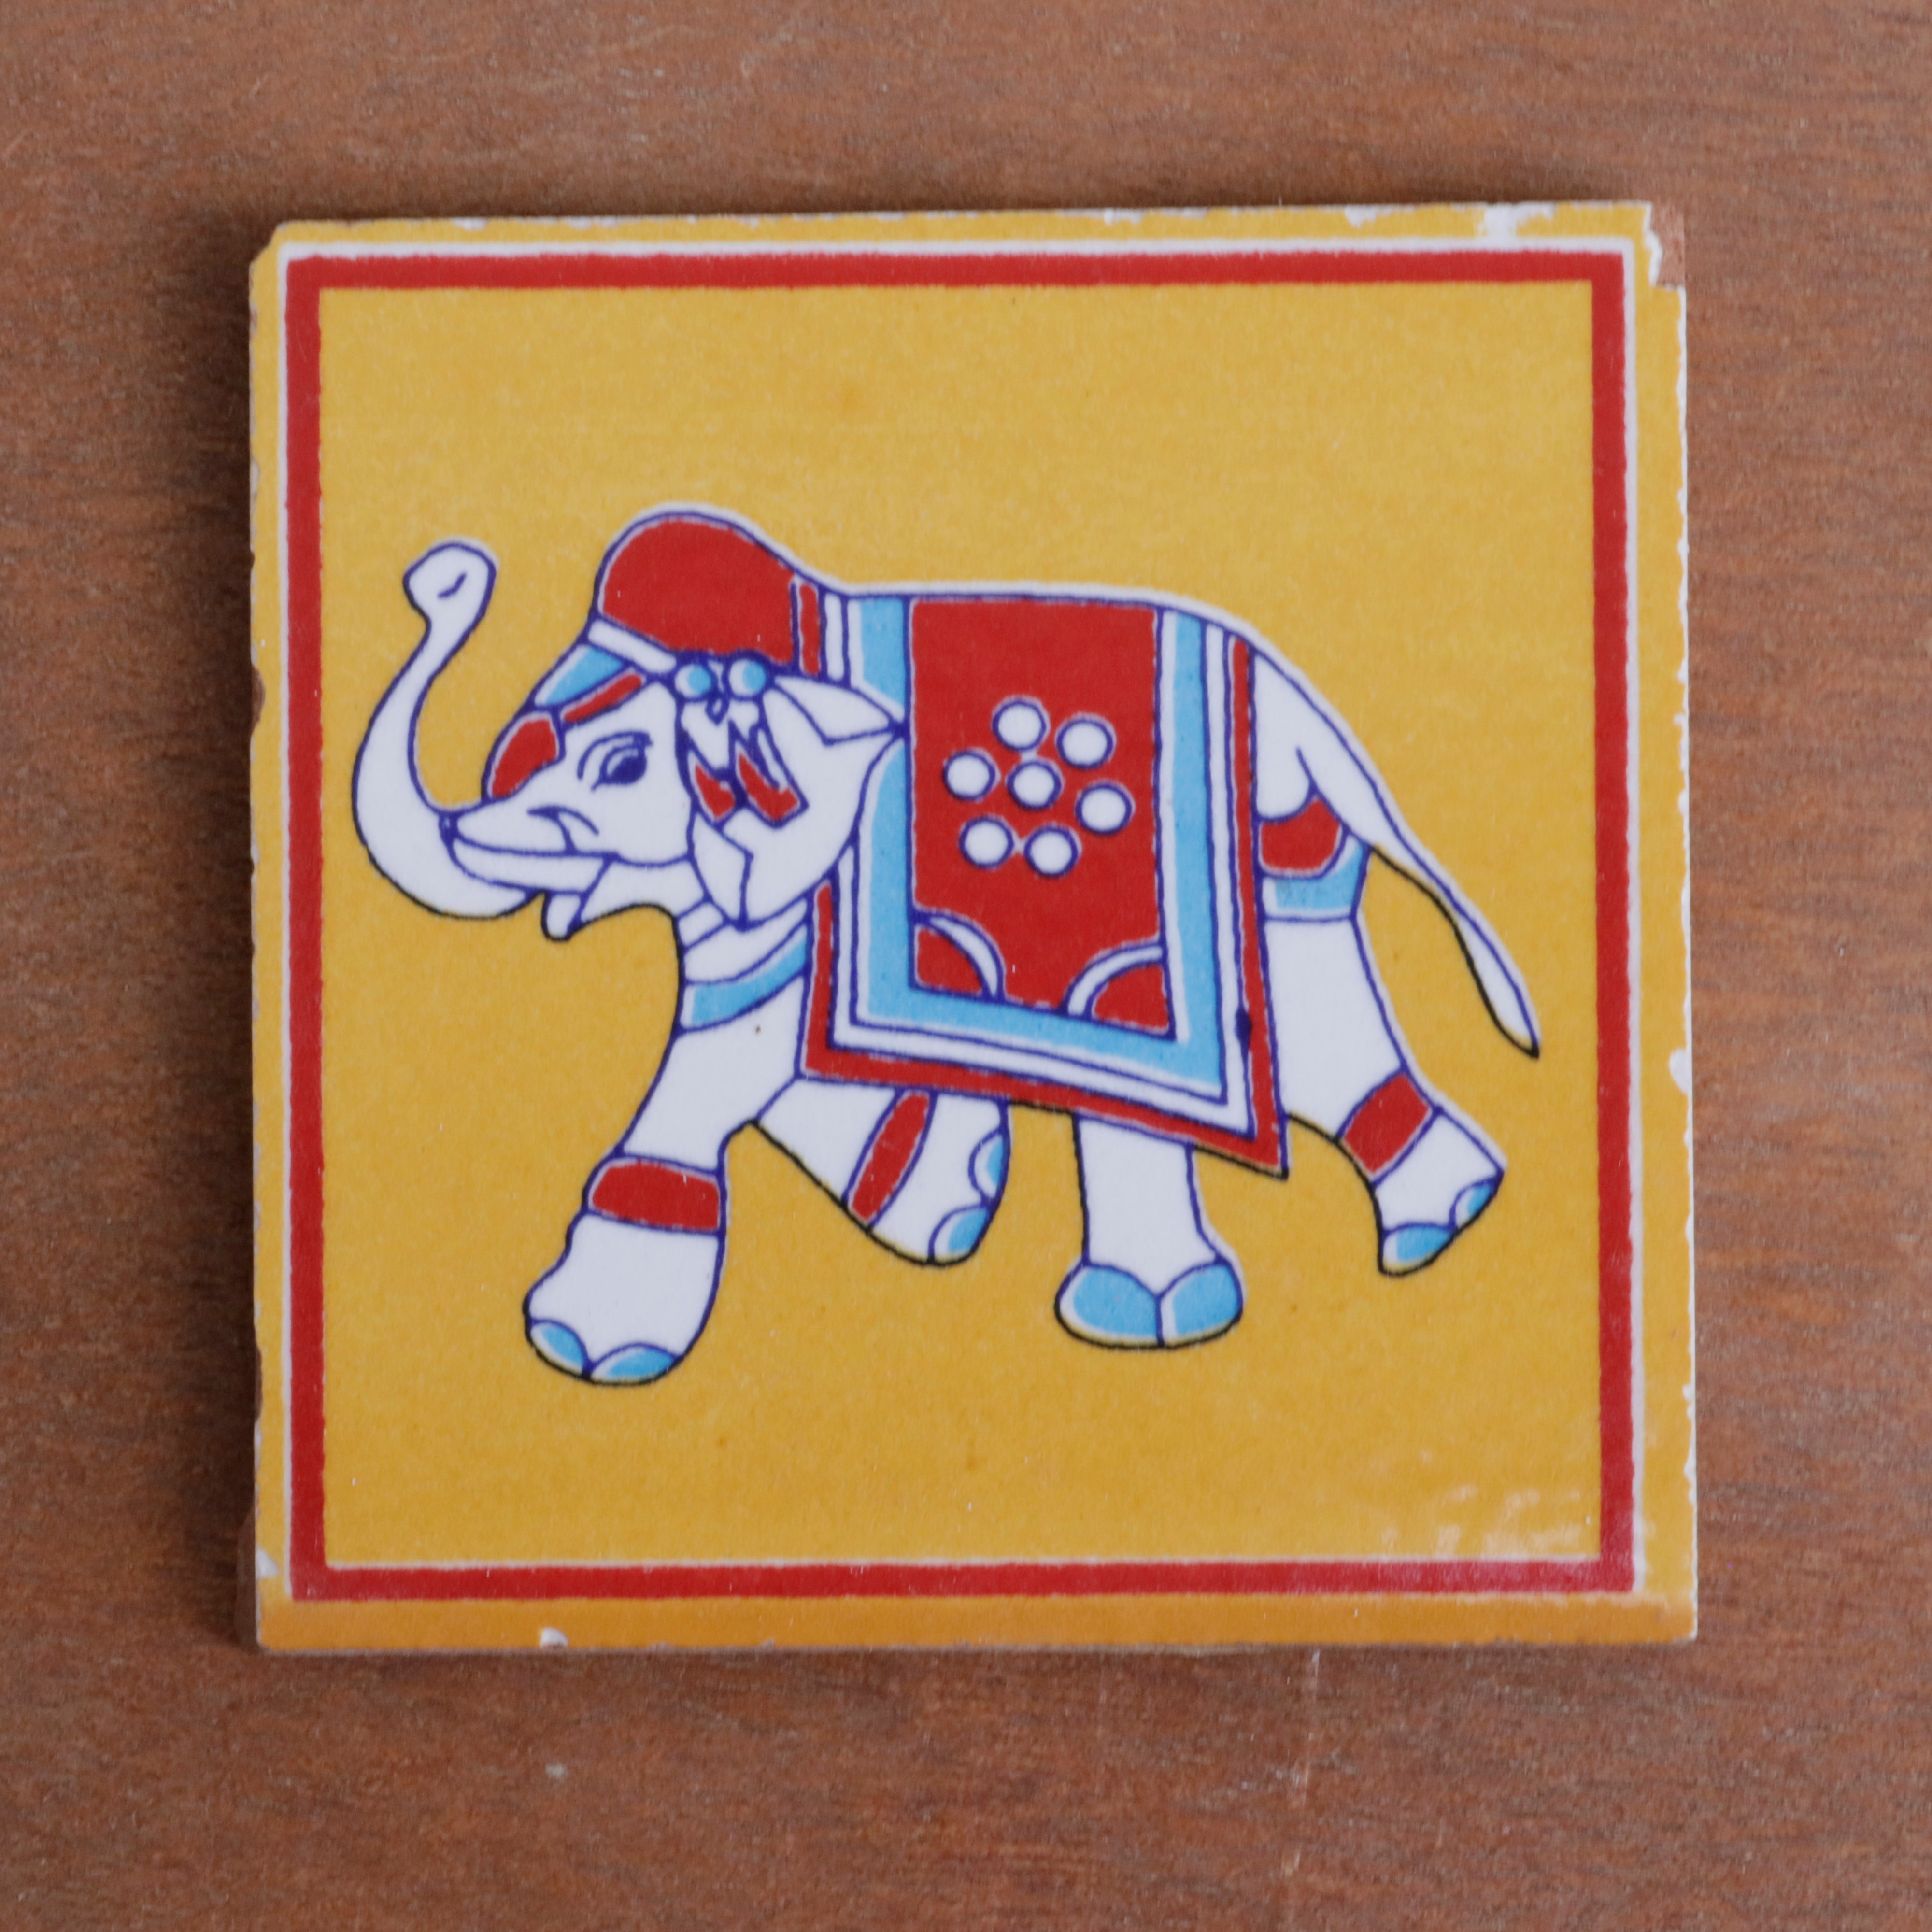 Indian Antique Style Elephant Designed Ceramic Square Tile Ceramic Tile